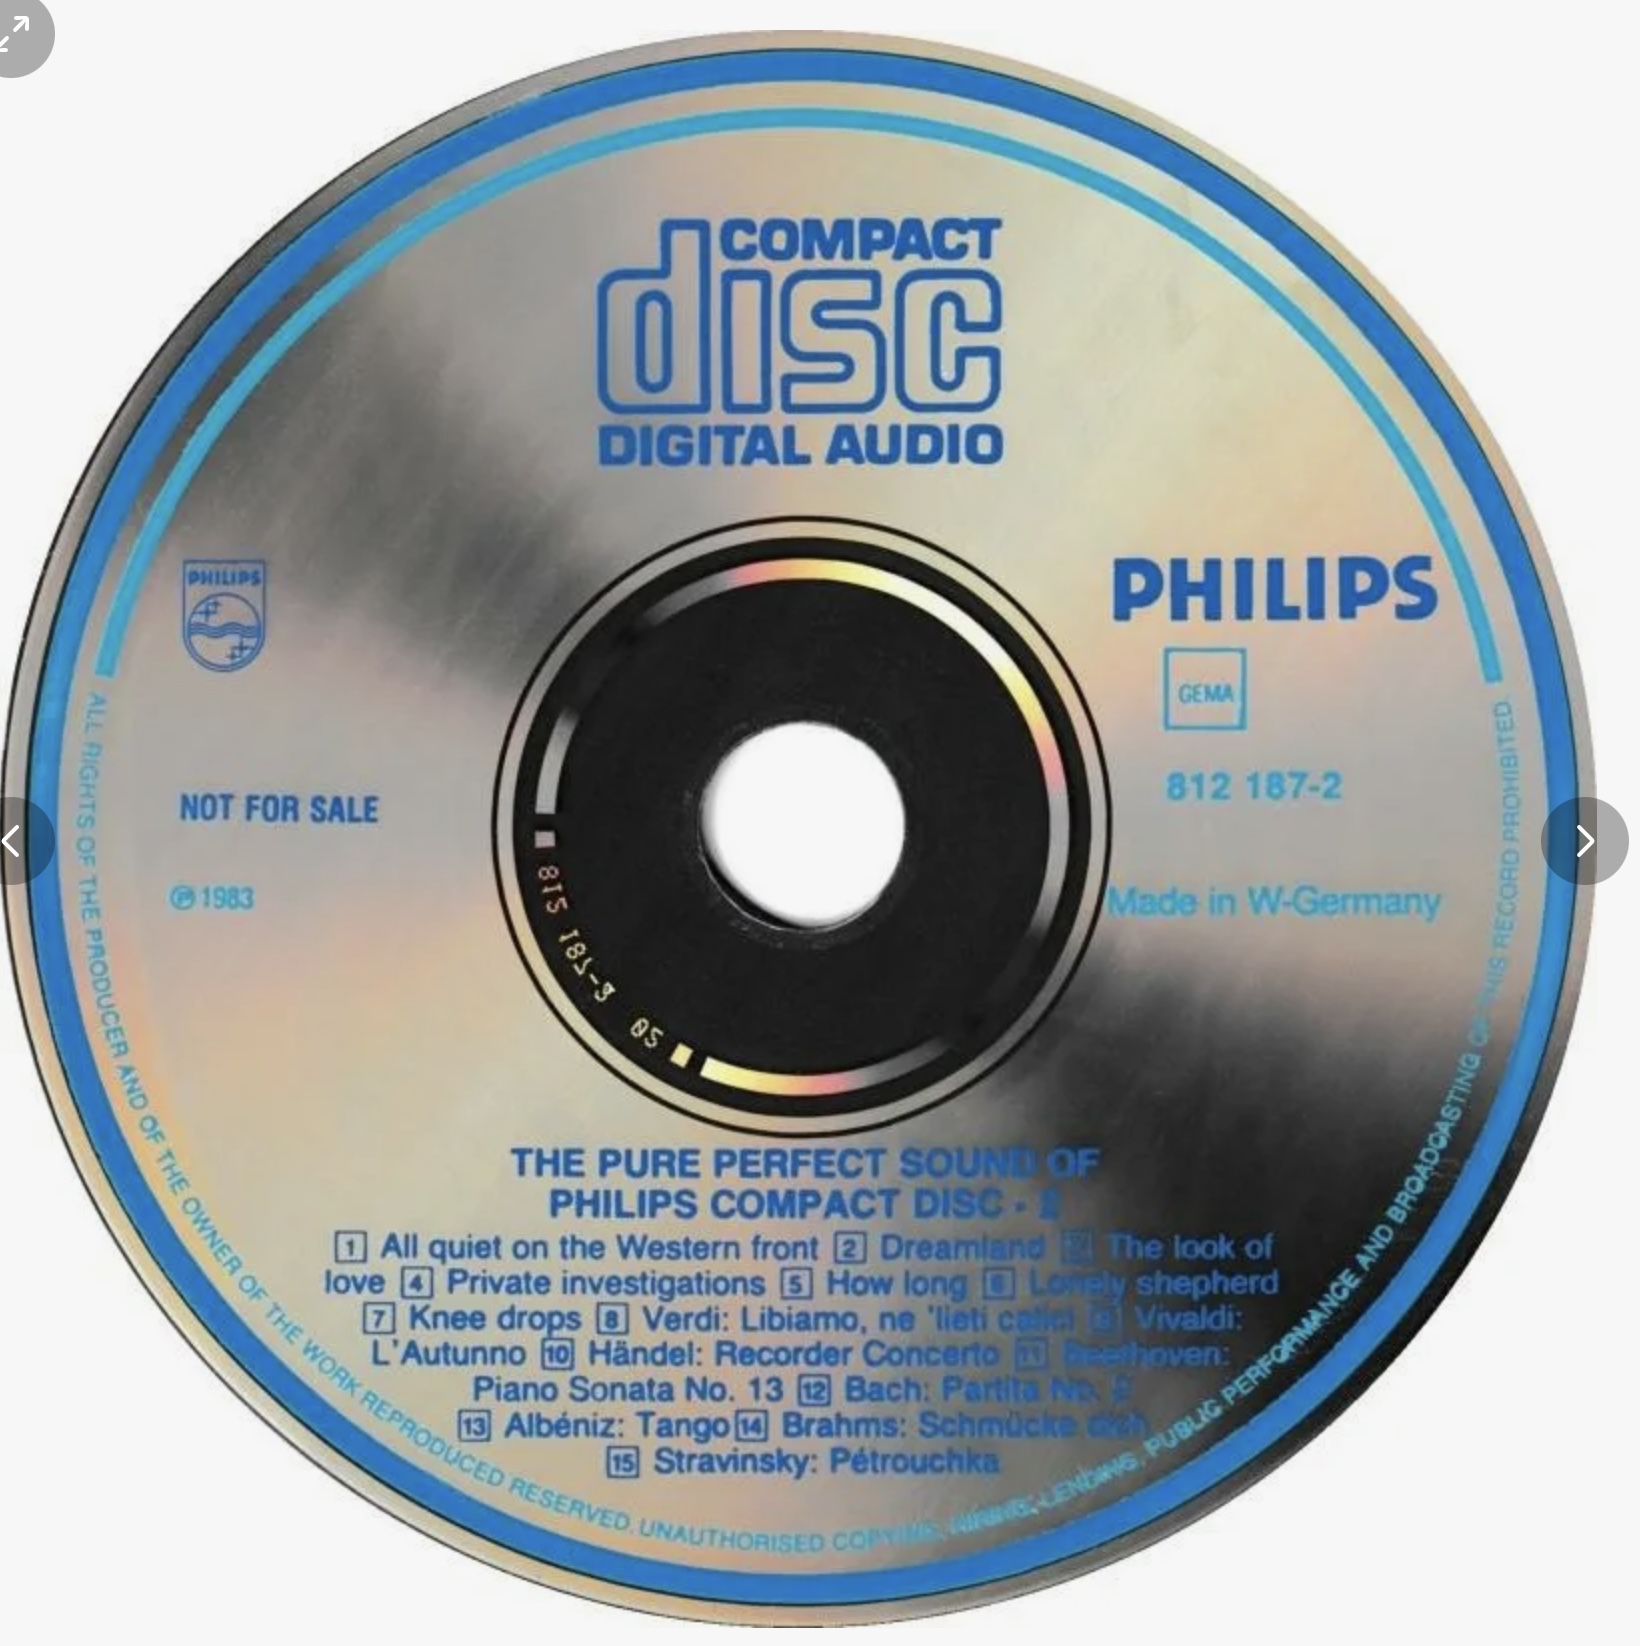 Русский аудио песни. Компакт – диск, Compact Disc (CD). Sony Compact Disc Digital Audio. Compact Disc Digital Audio магнитола. Philips Compact Disc.